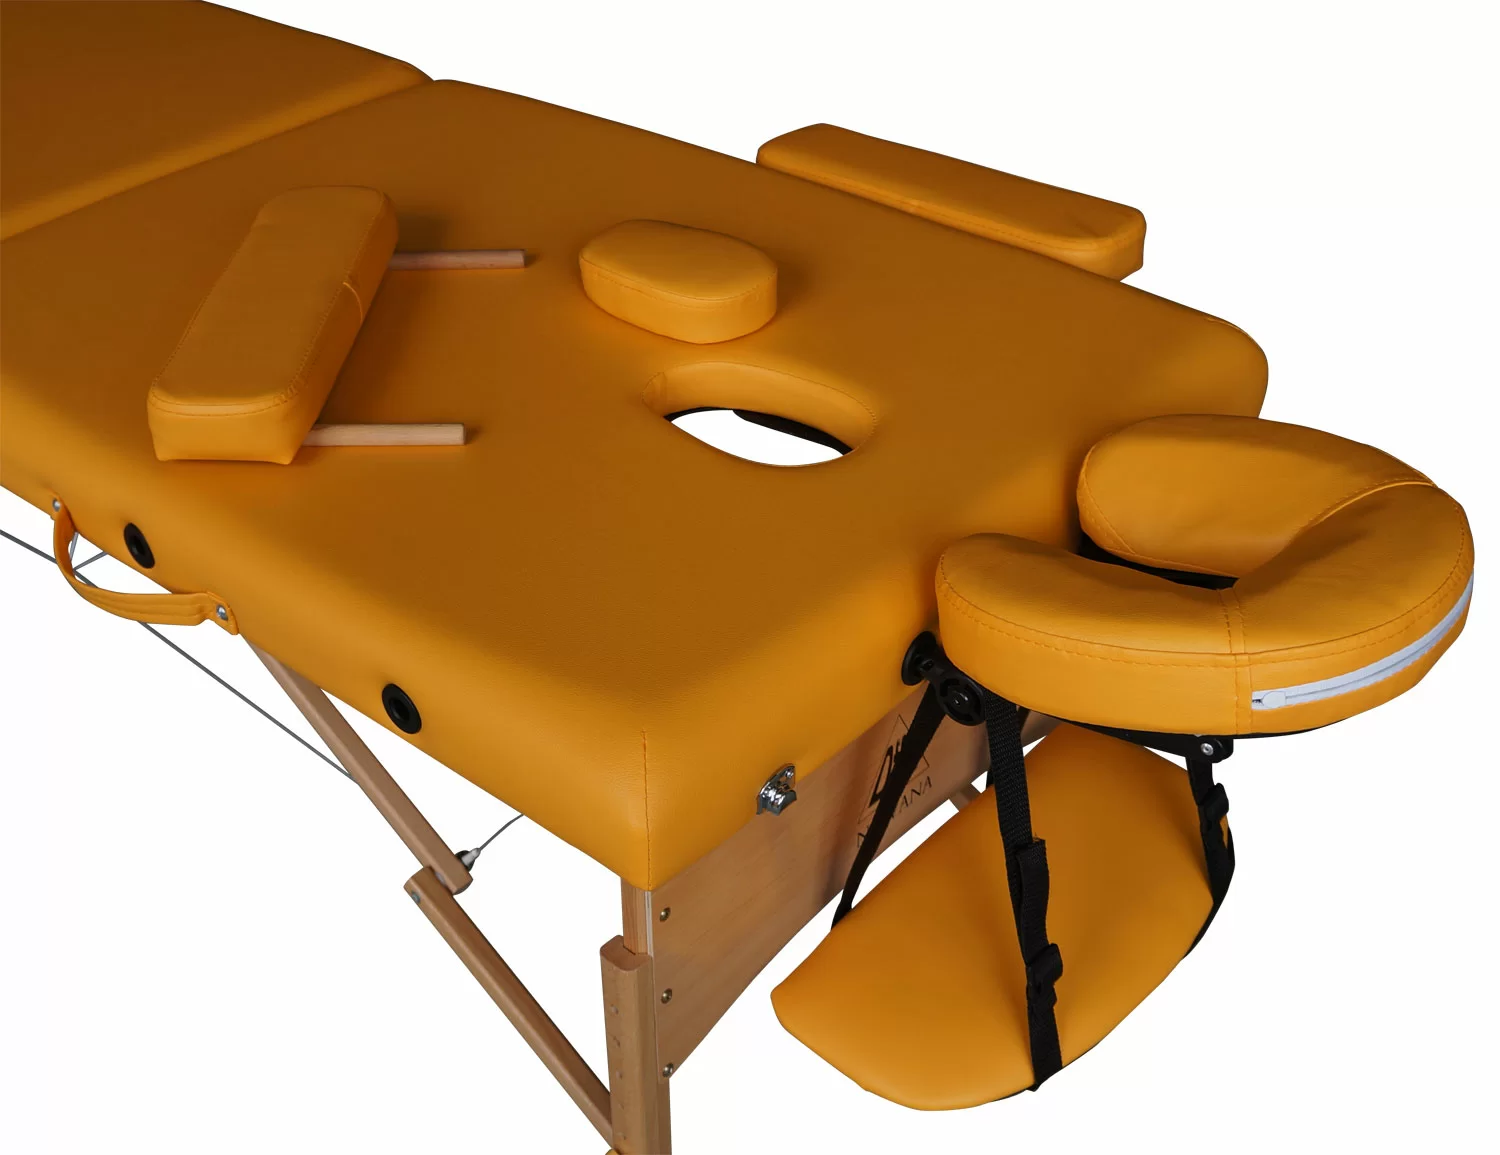 Фото Массажный стол DFC NIRVANA, Relax, дерев. ножки, цвет горчичный (Mustard) TS20111_M со склада магазина СпортСЕ